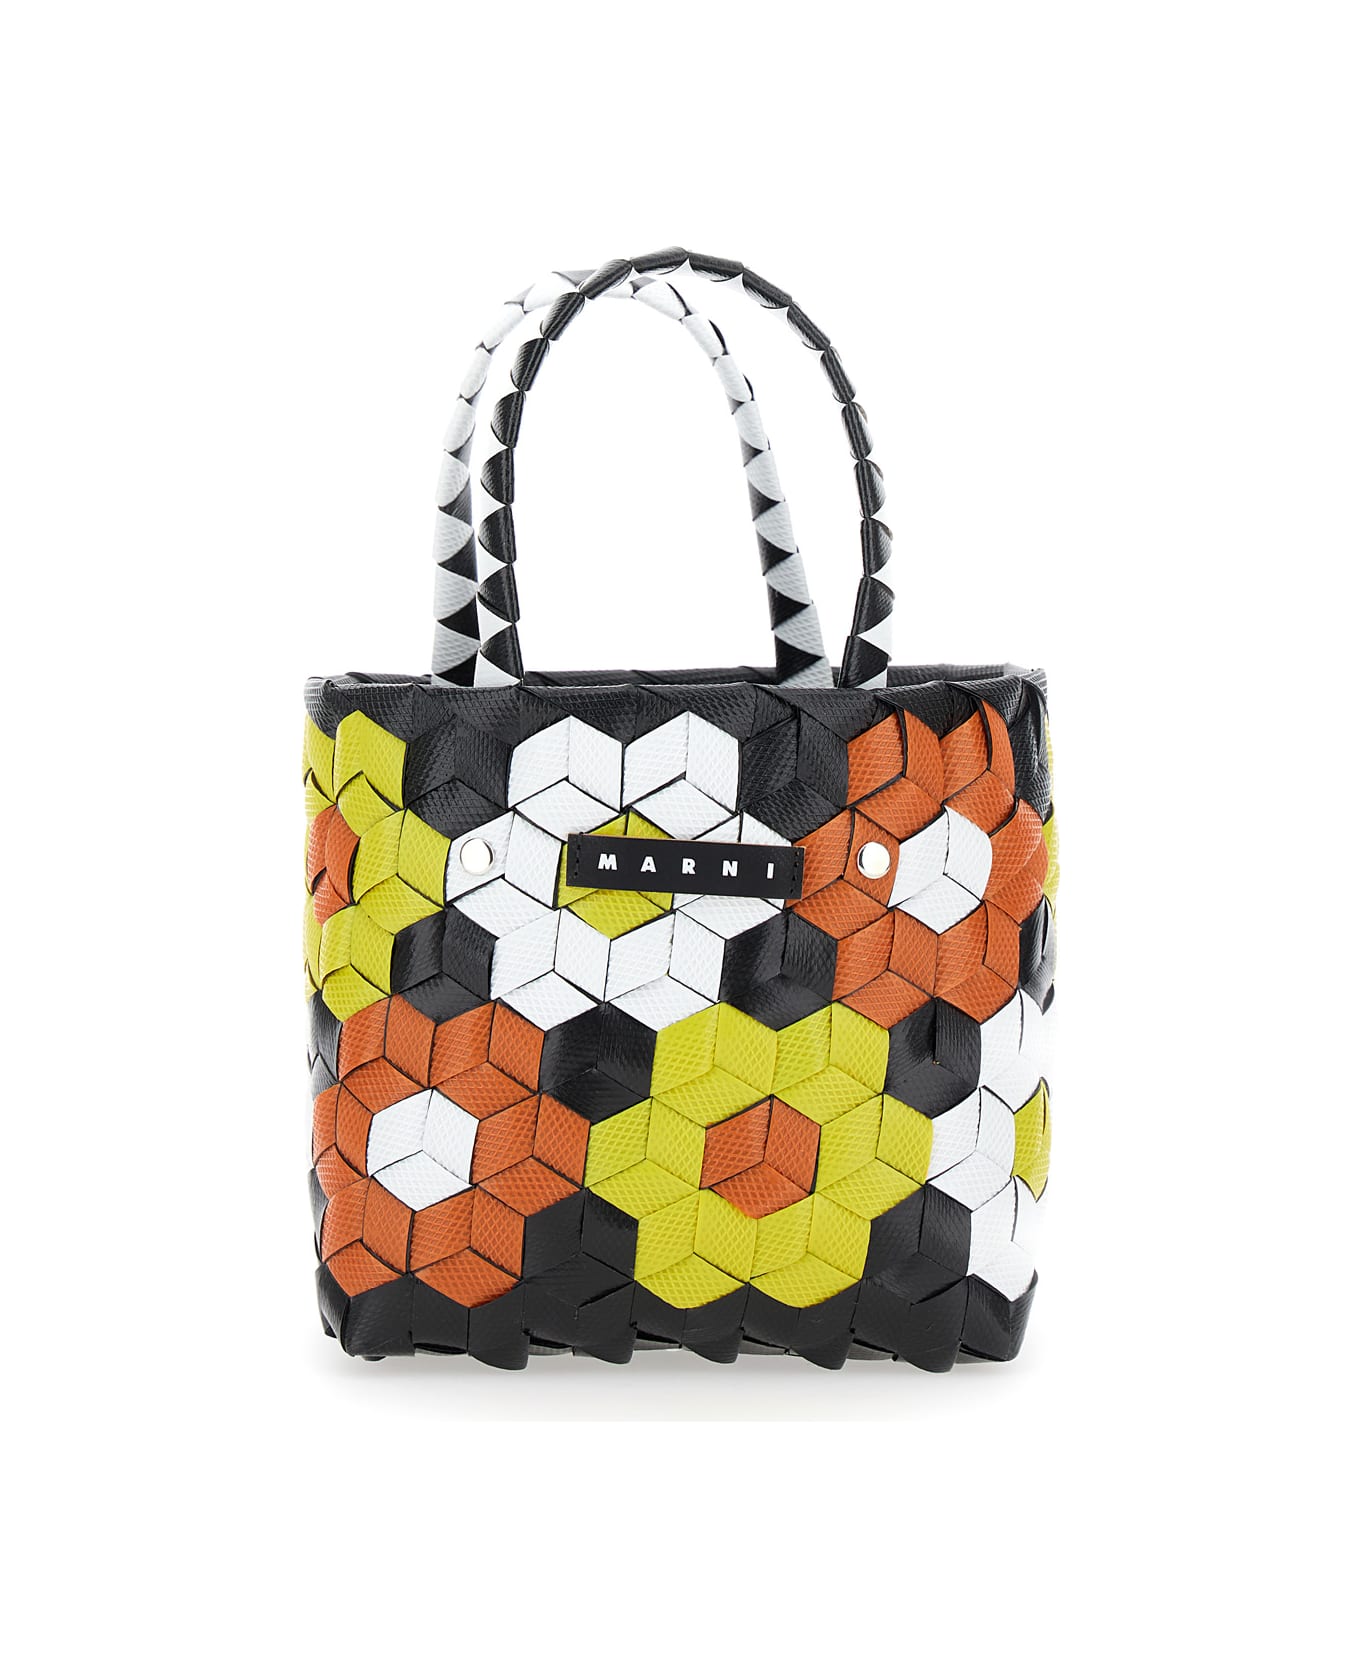 Marni 'sunflower' Multicolor Handbag With Floreal Motif In Braided Fabric Girl - Black